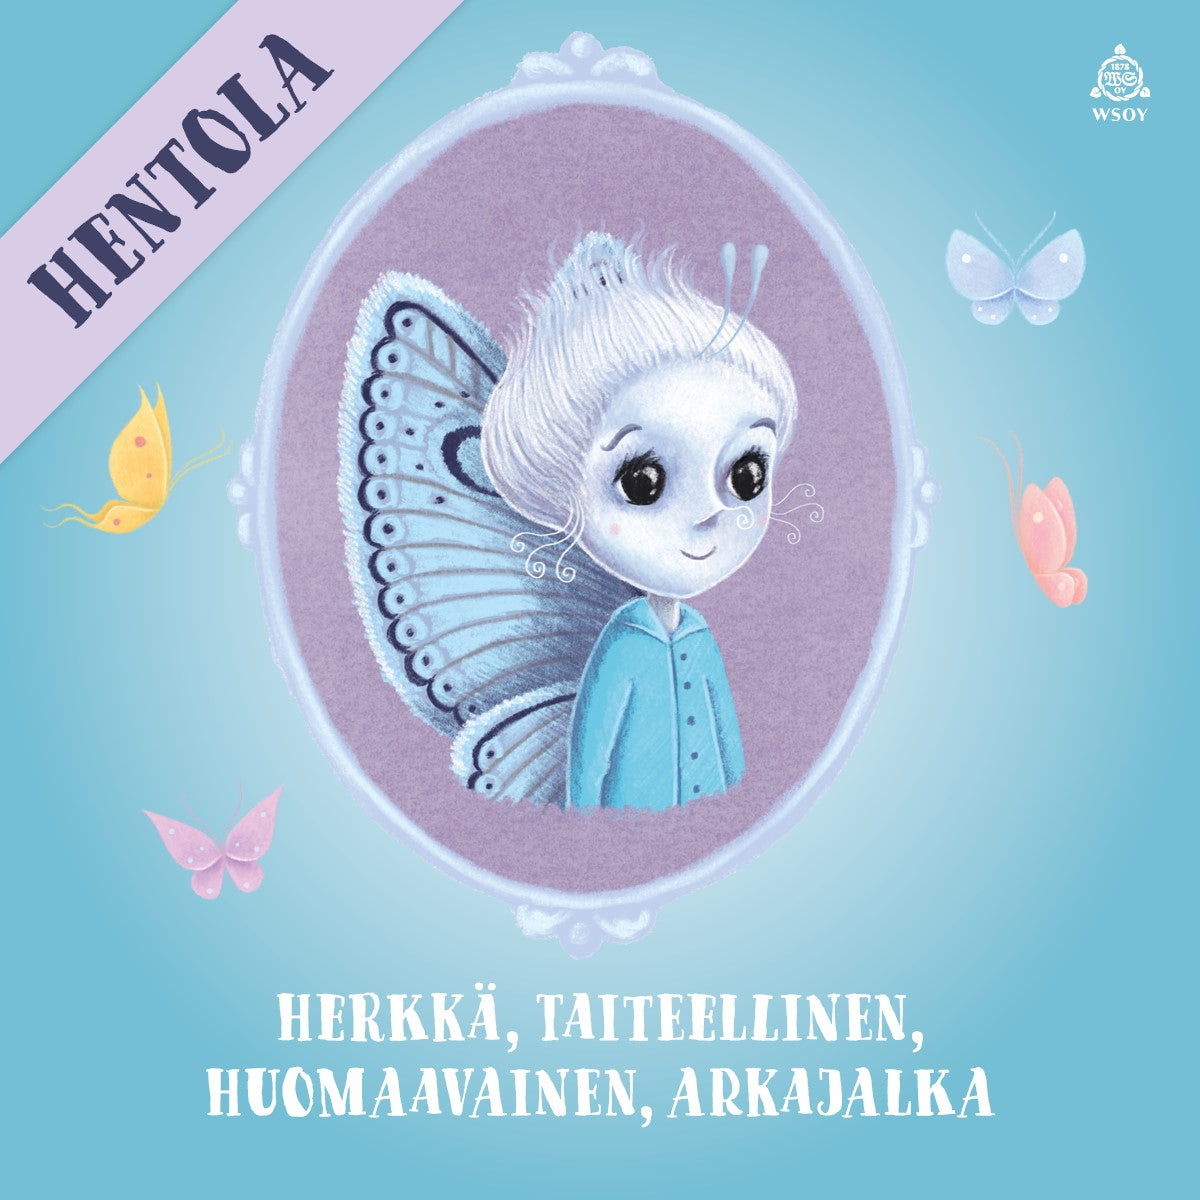 Hentola Murkens-hahmo